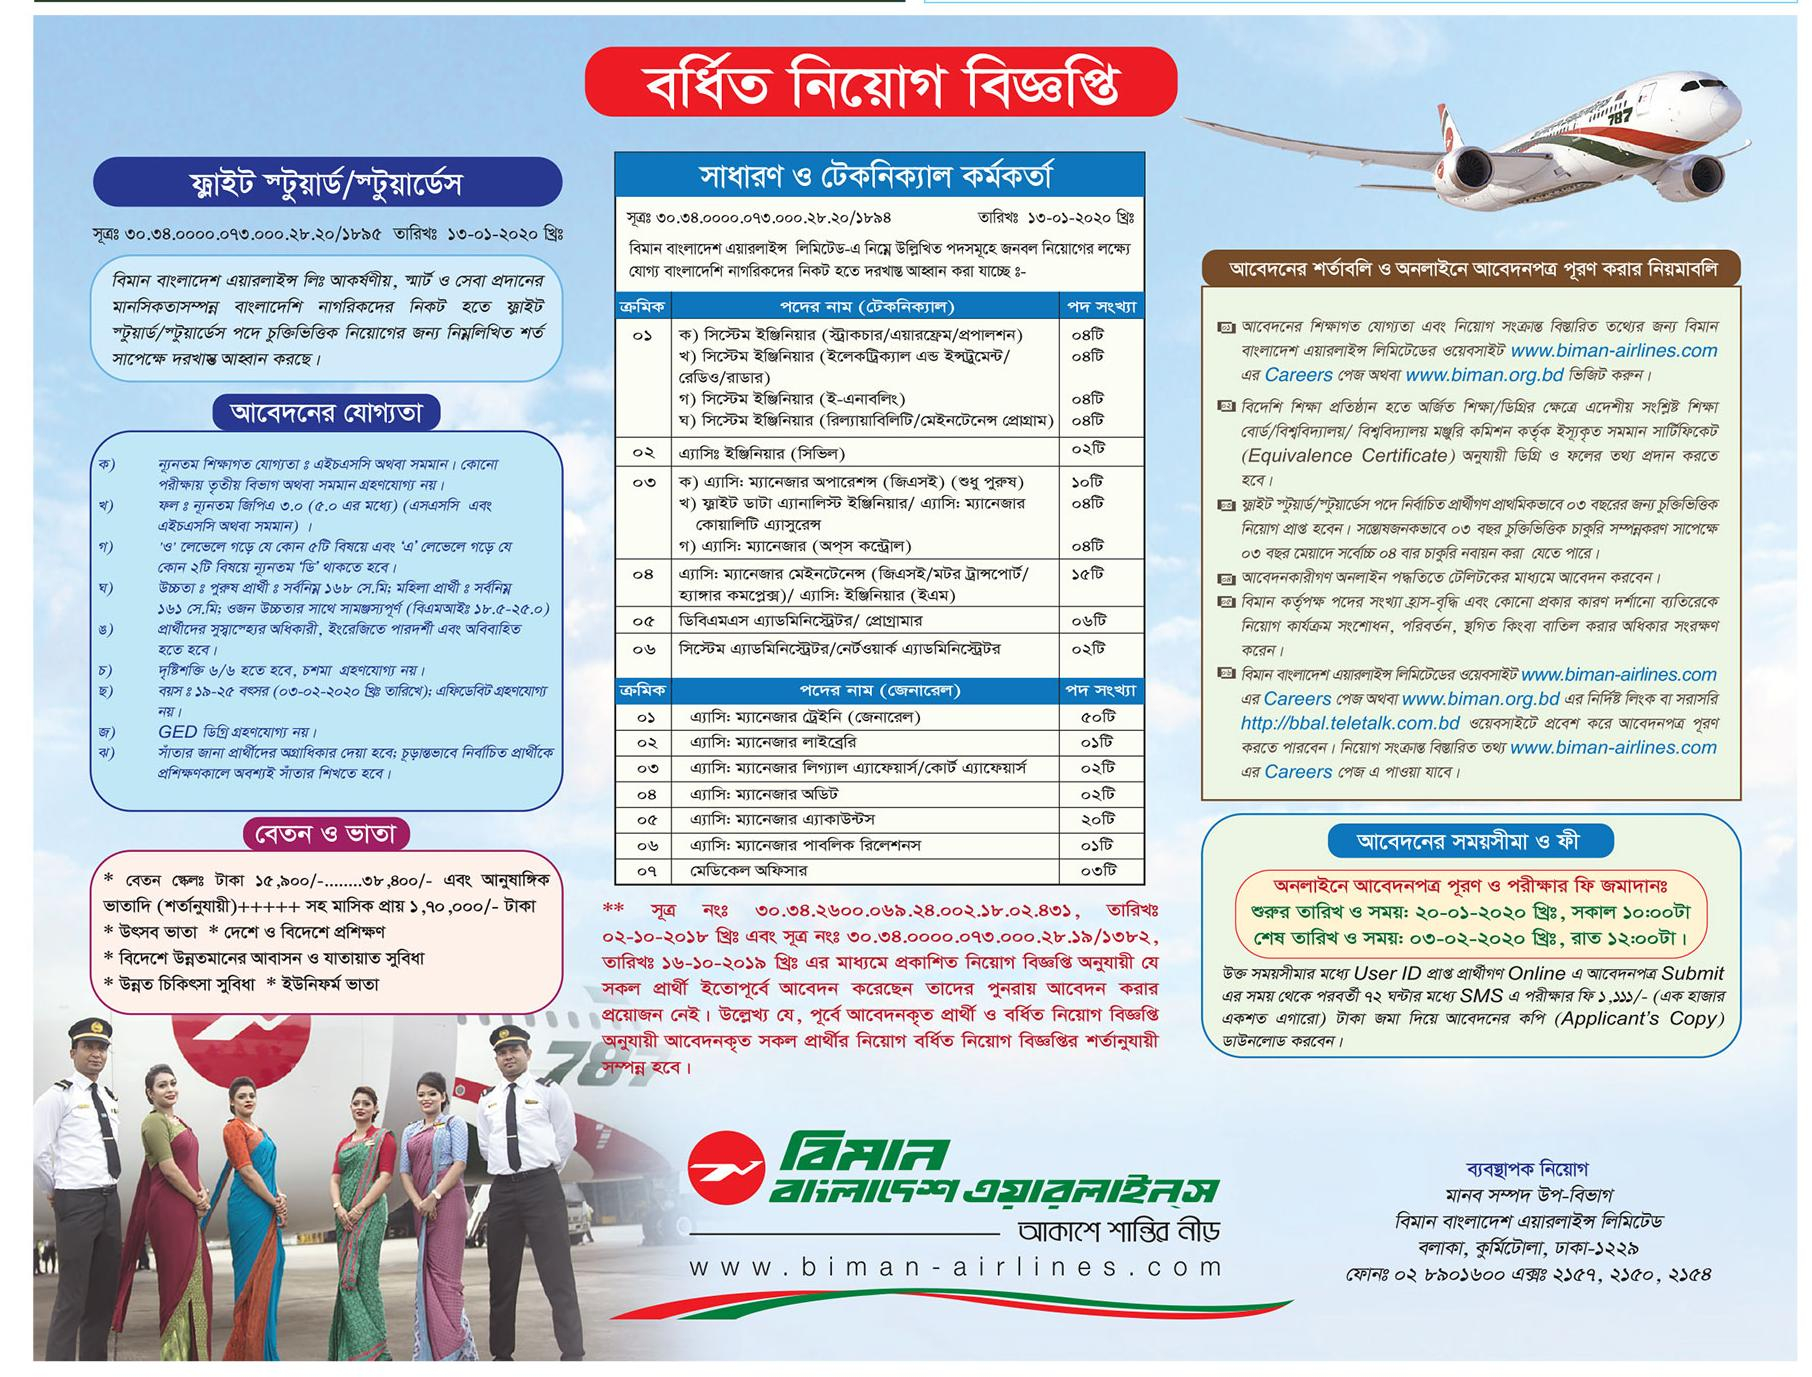 BBAL Job Circular 2022 Application Form Bbal teletalk bd Biman